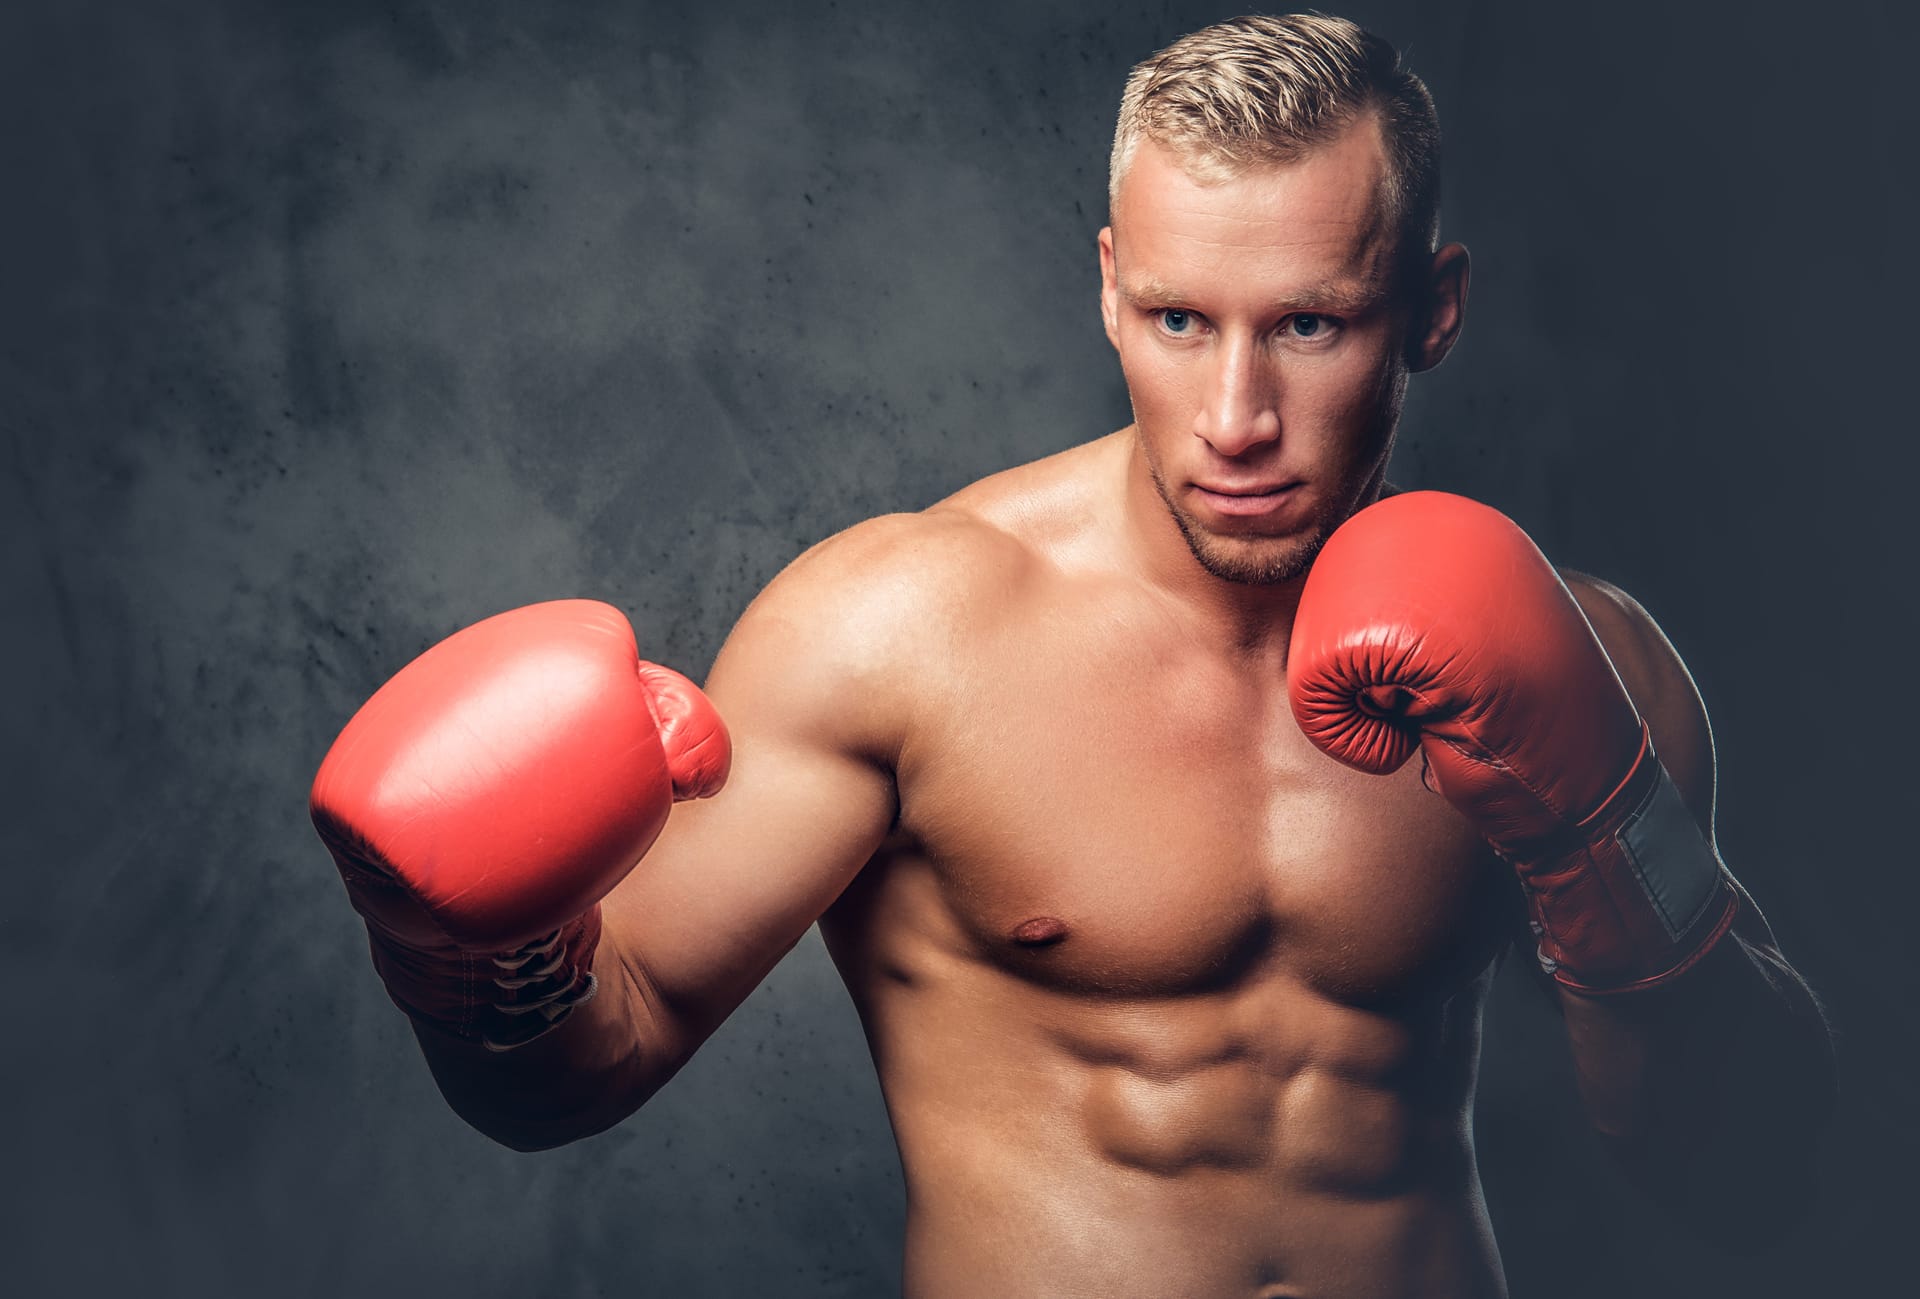 Shirtless kick boxer showing his punches kicks grey background studio